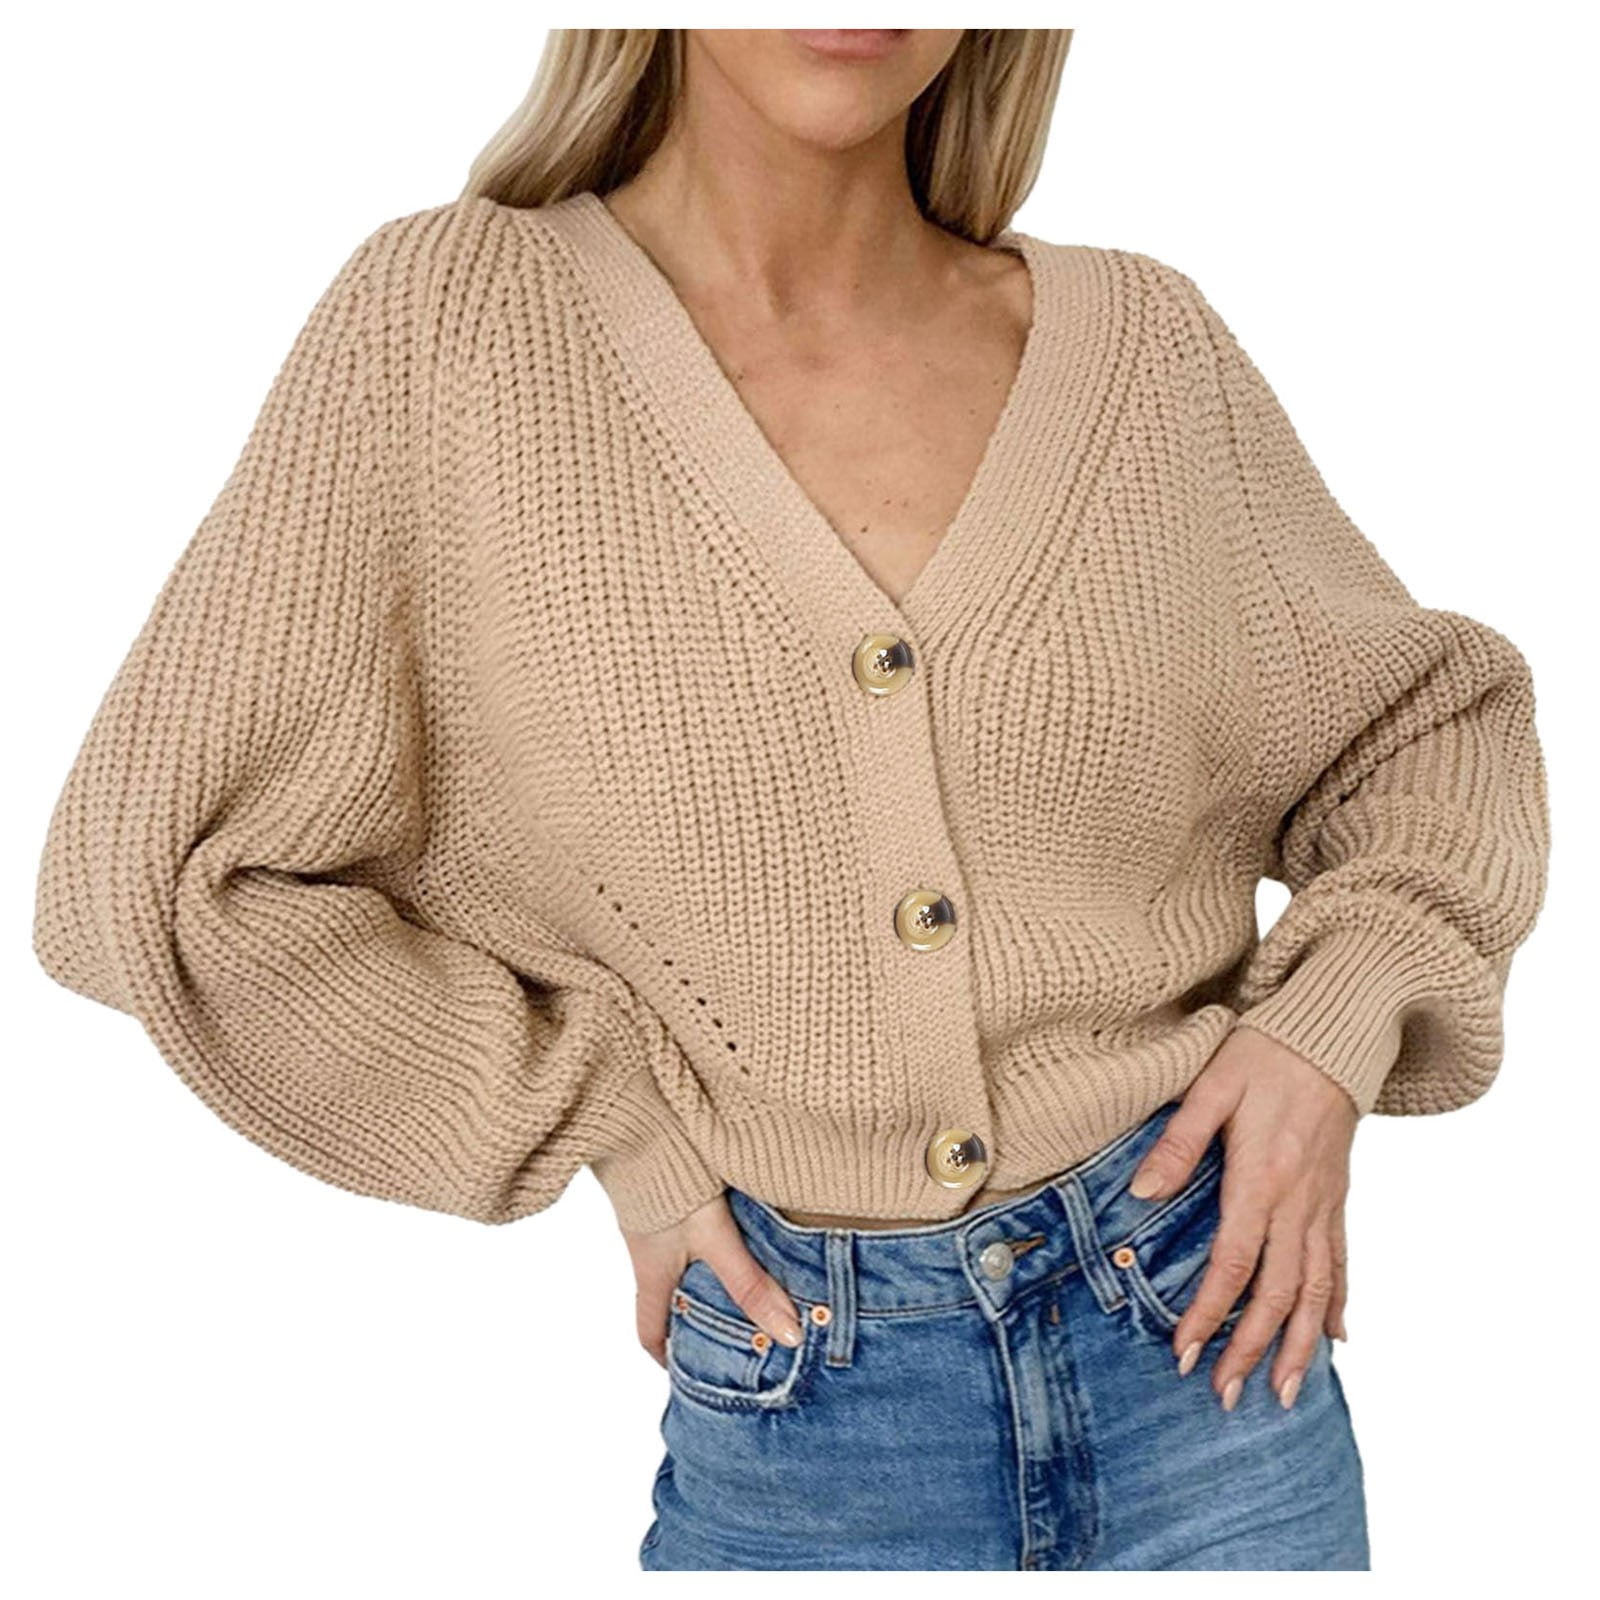 vbnergoie Women's Long Sleeve Knit Sweater Open Front Cardigan Button Loose  Outerwear Summer Light Weight Cardigan Cardigans for Women Fall